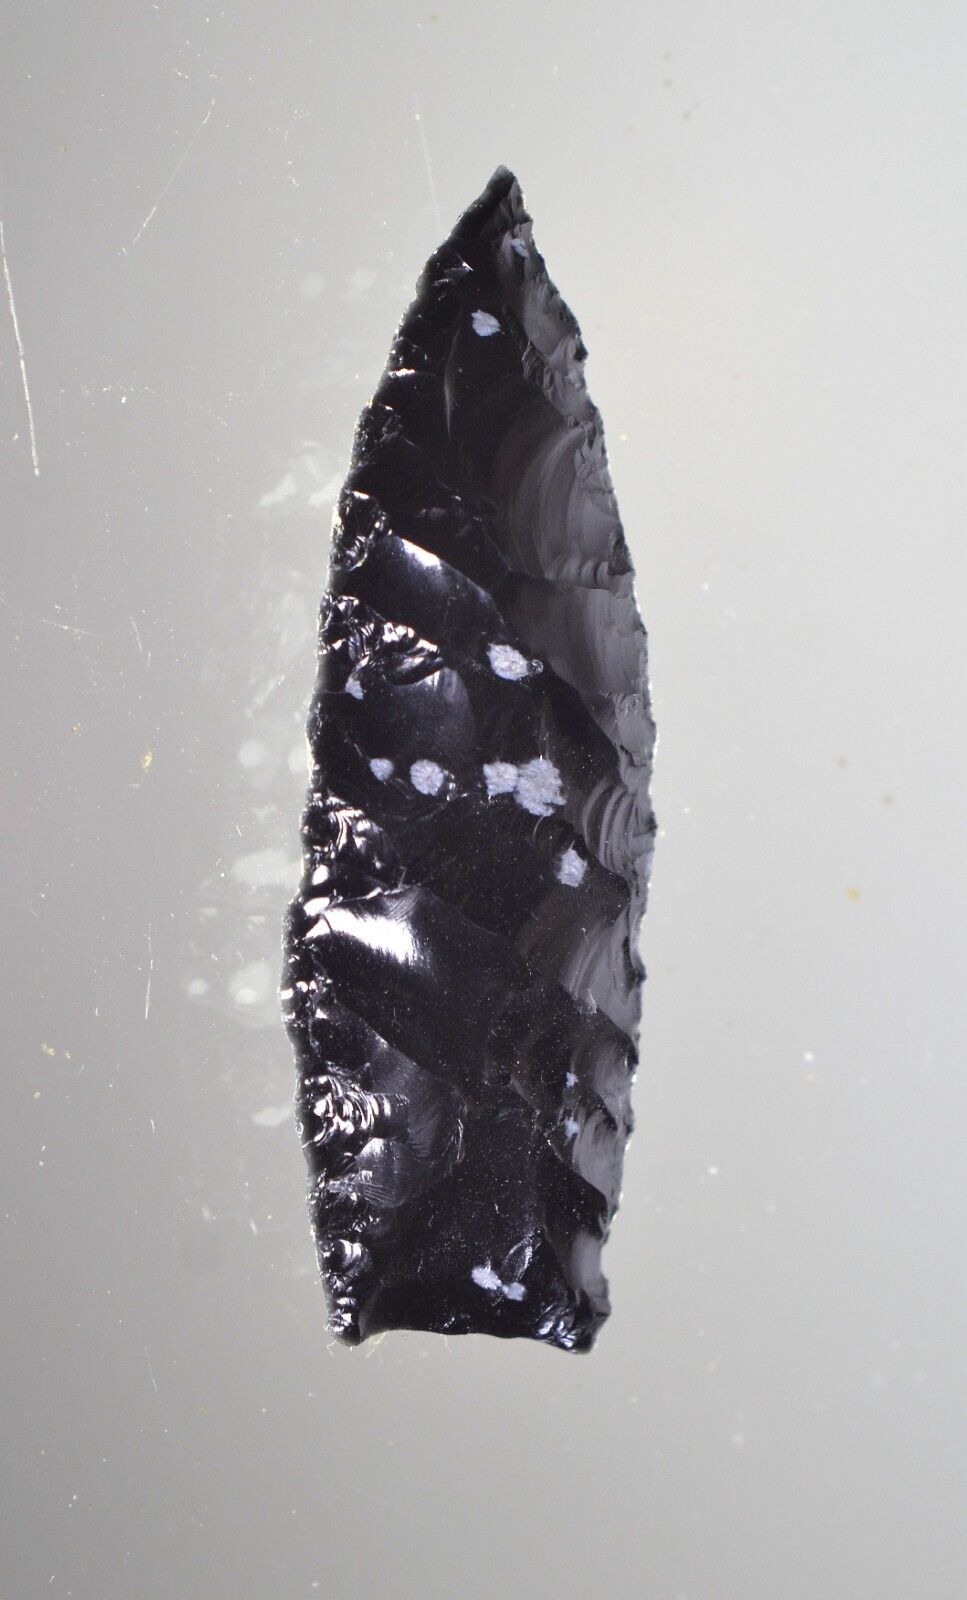 Authentic Modern Reproduction of Pre 1600 Utah Snowflake Obsidian Arrowhead